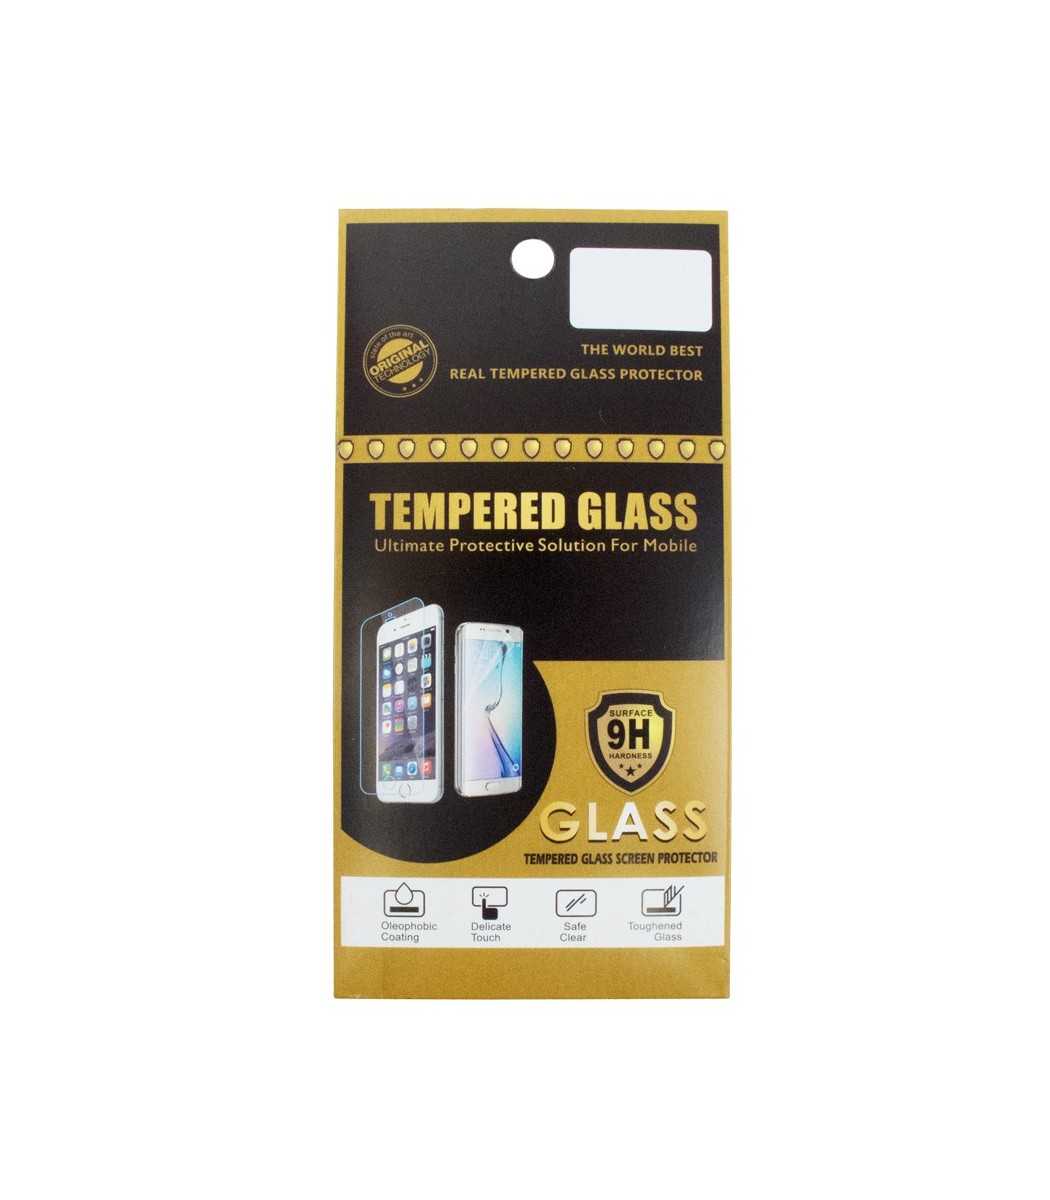 Universal 4.5 TEMPERED GLASS ΠΡΟΣΤΑΤΕΥΤΙΚΗ ΜΕΜΒΡΑΝΗ Universal 4.5\\" - Tempered GlassΚΙΝΗΤΗ ΤΗΛΕΦΩΝΙΑ